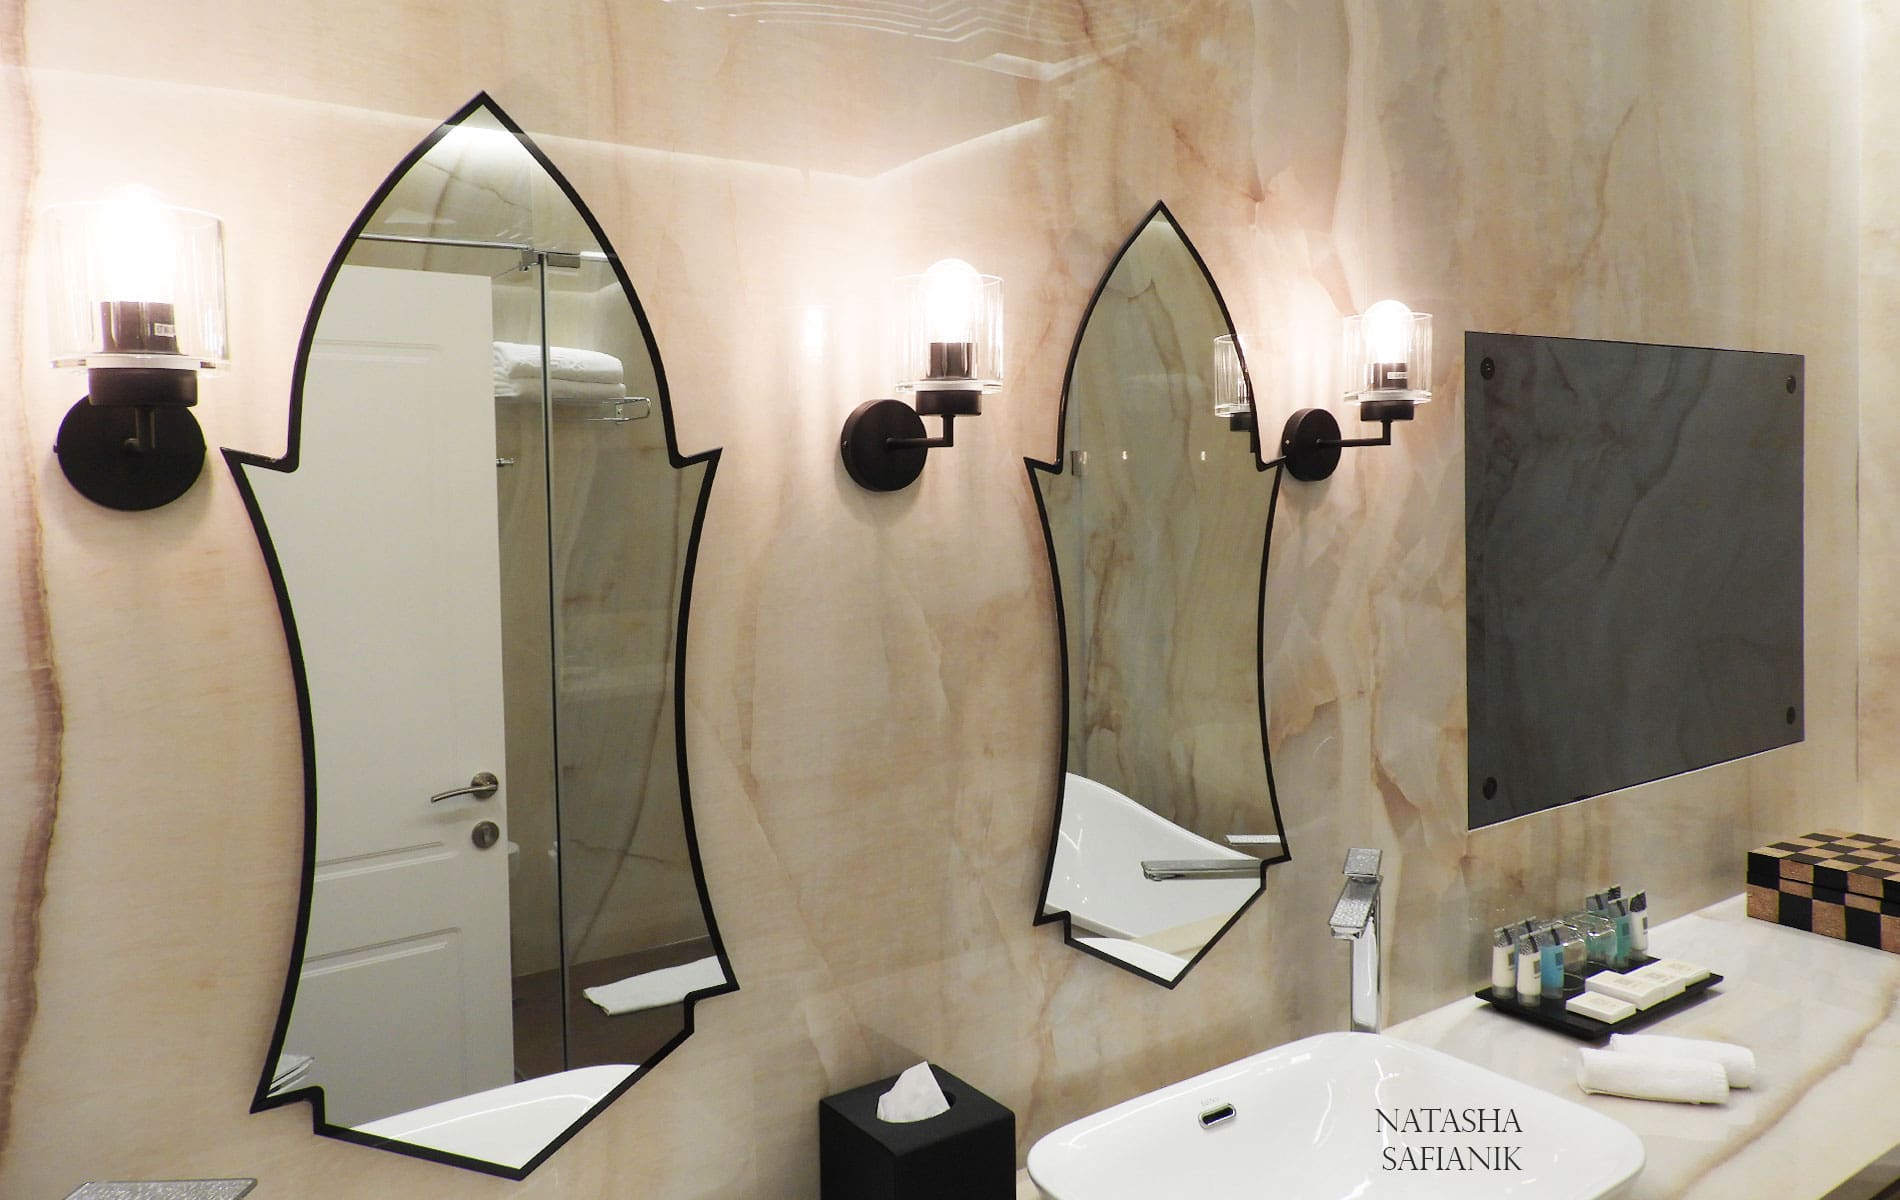 Interior Design of Luxury Bathroom at Hotel in Netanya